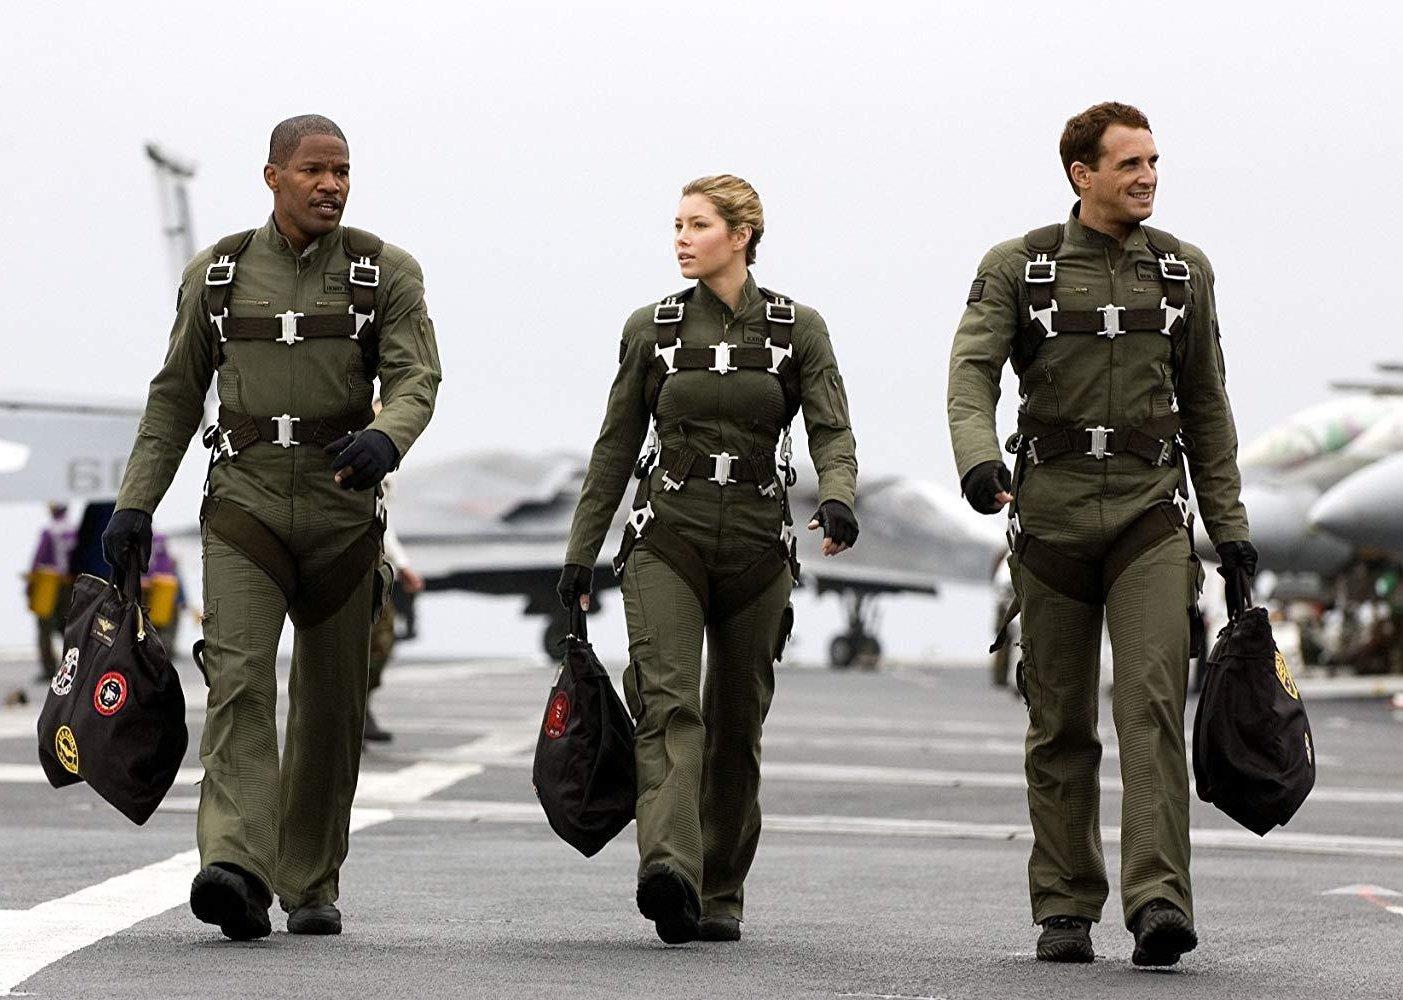 Jamie Foxx and Jessica Biel wearing fighter pilot gear